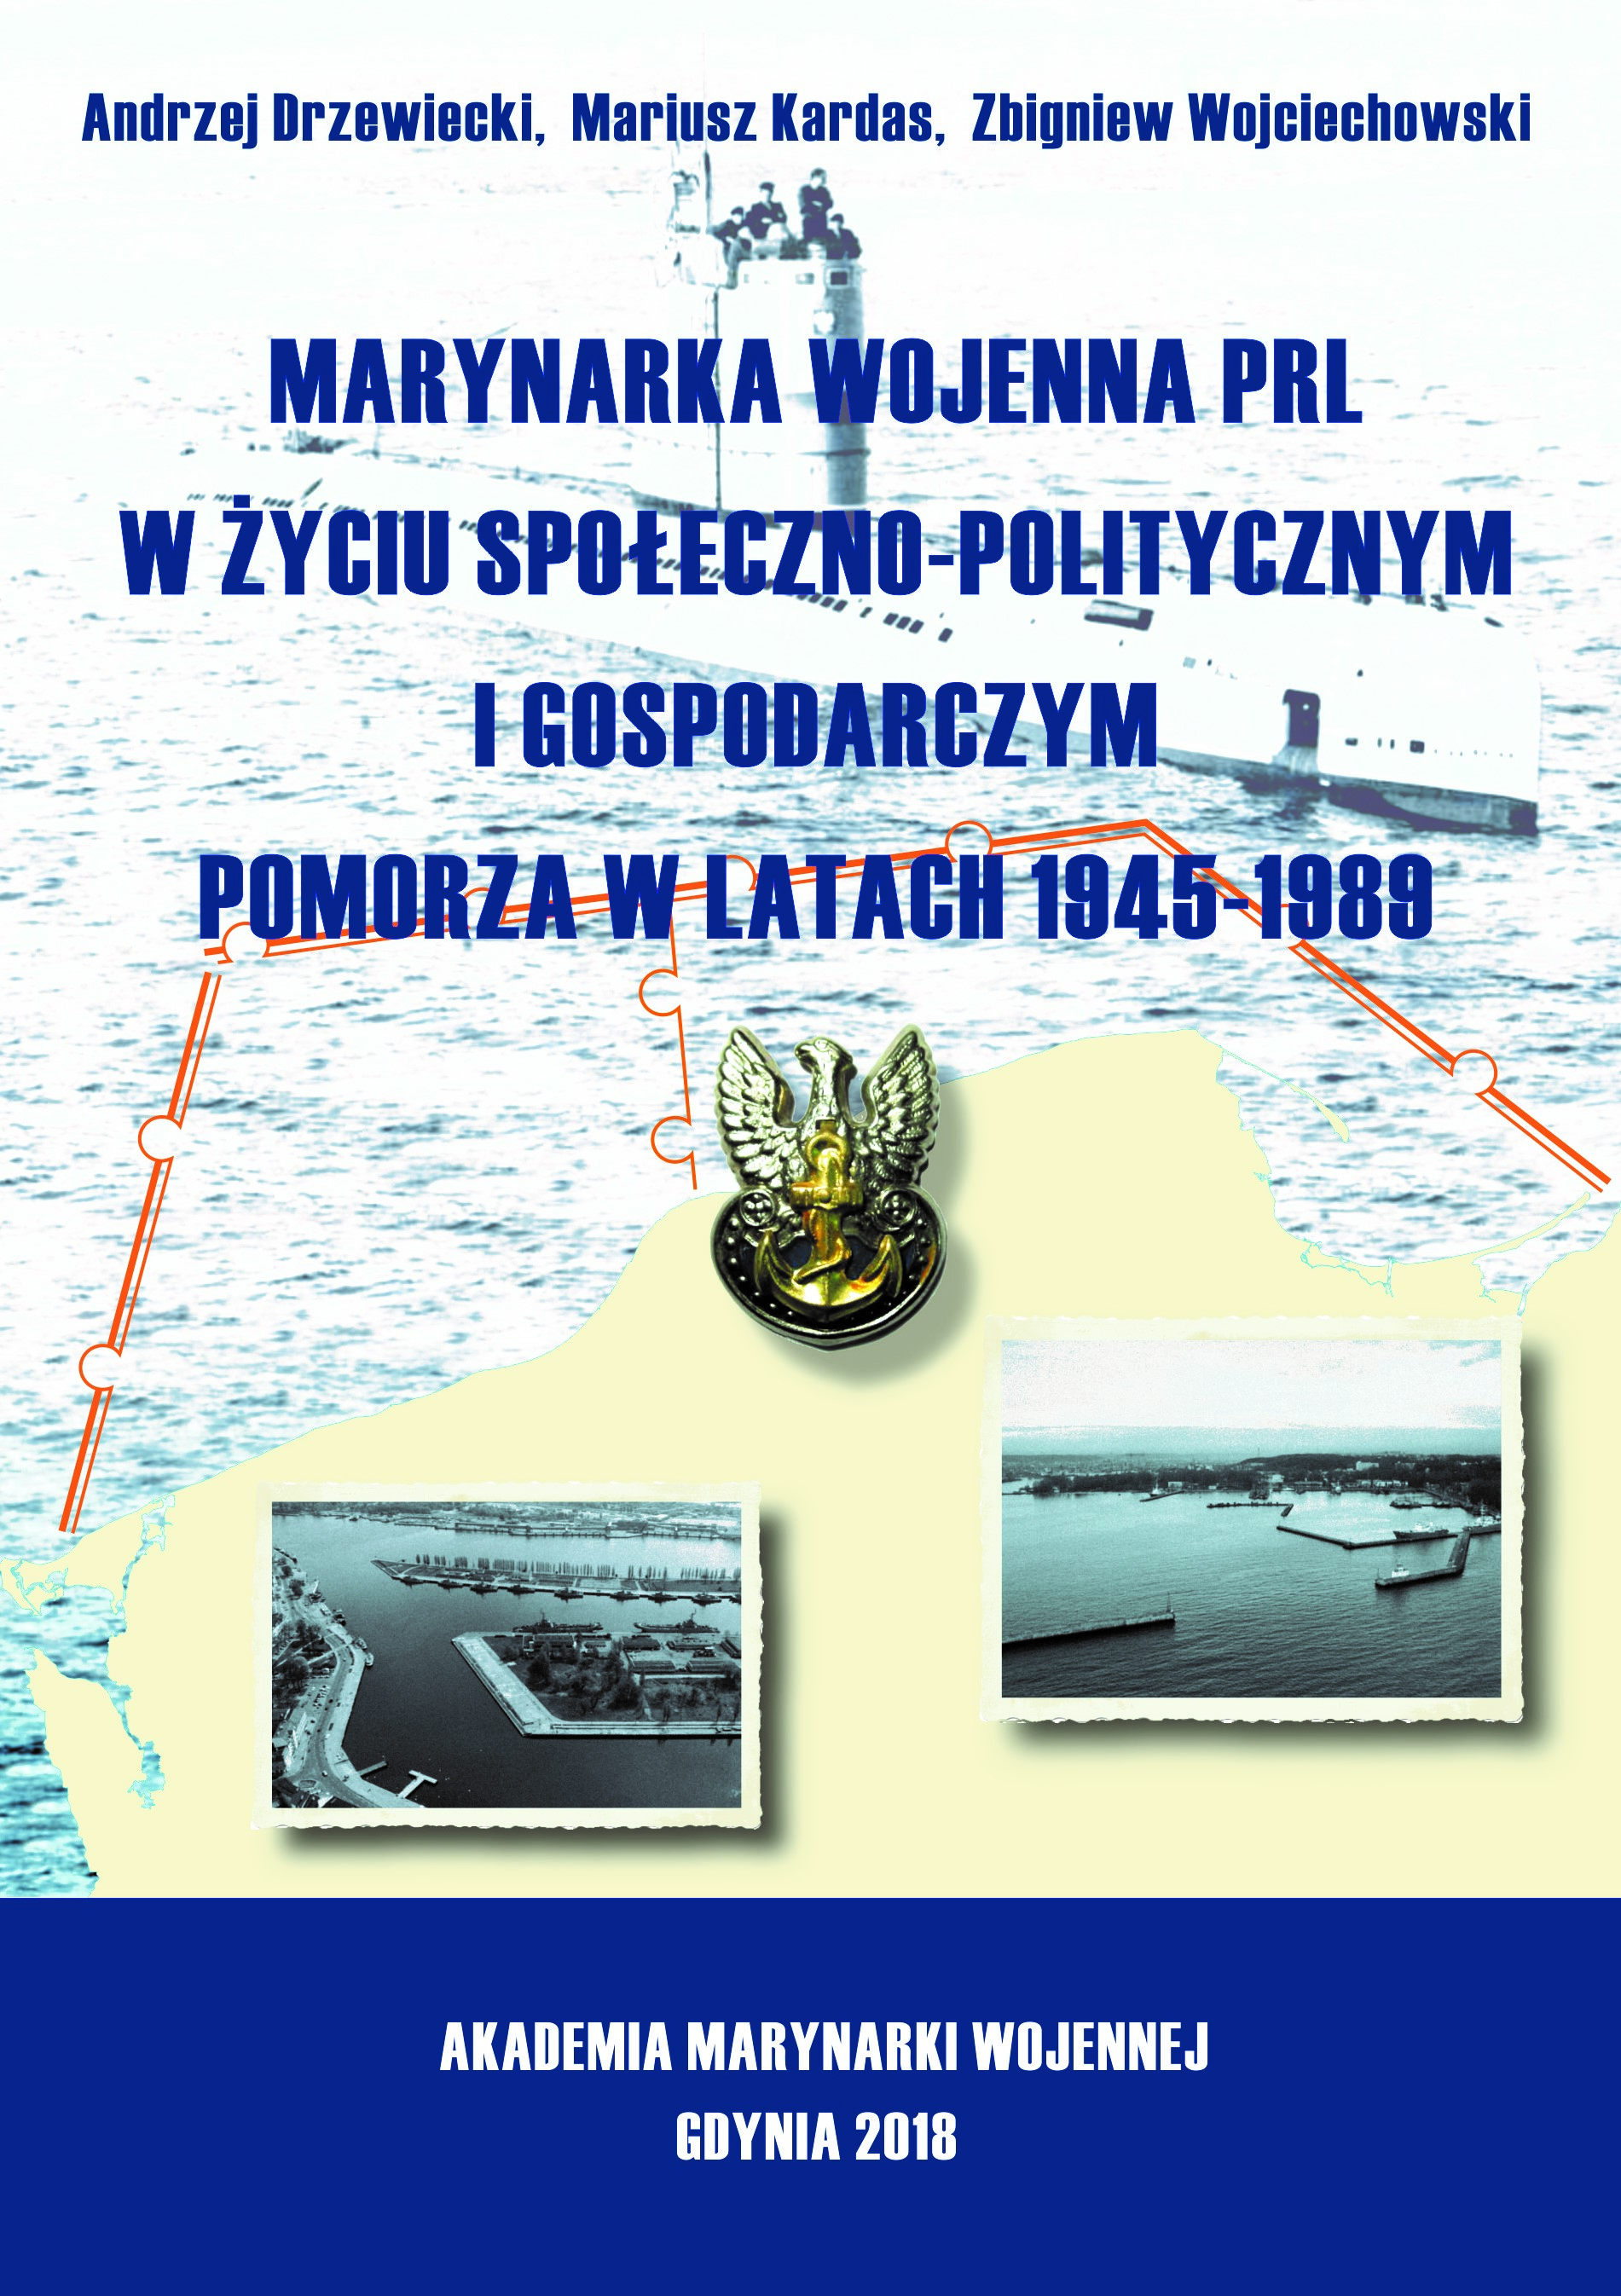 Marynarka Wojenna PRL